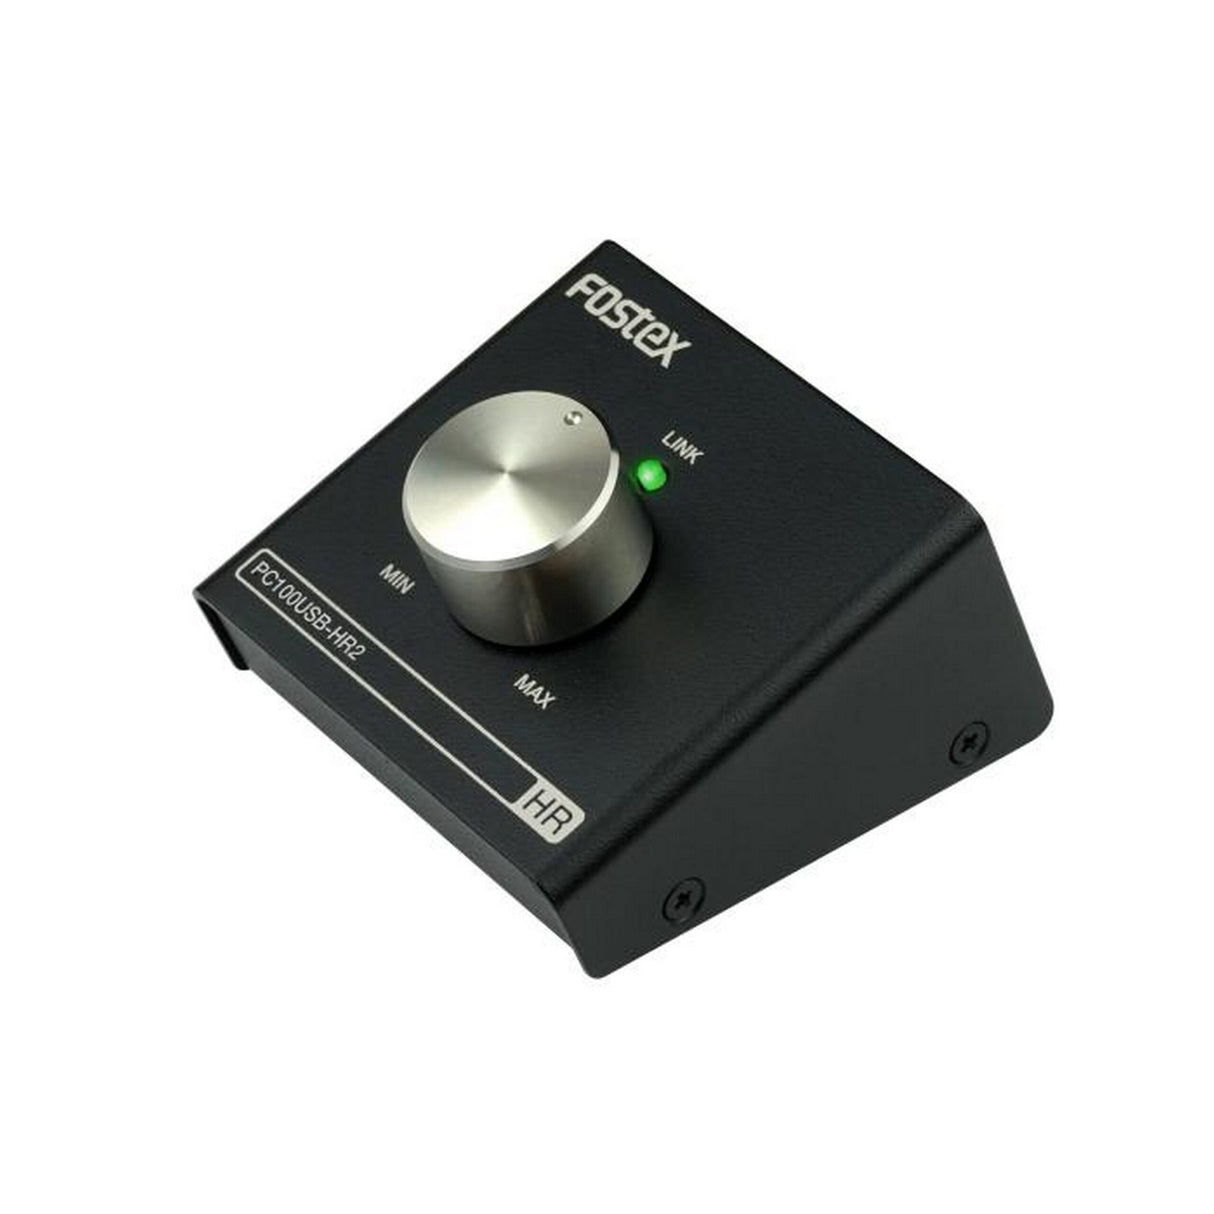 Fostex PC-100USB-HR-2 Hi-Res USB Volume Controller